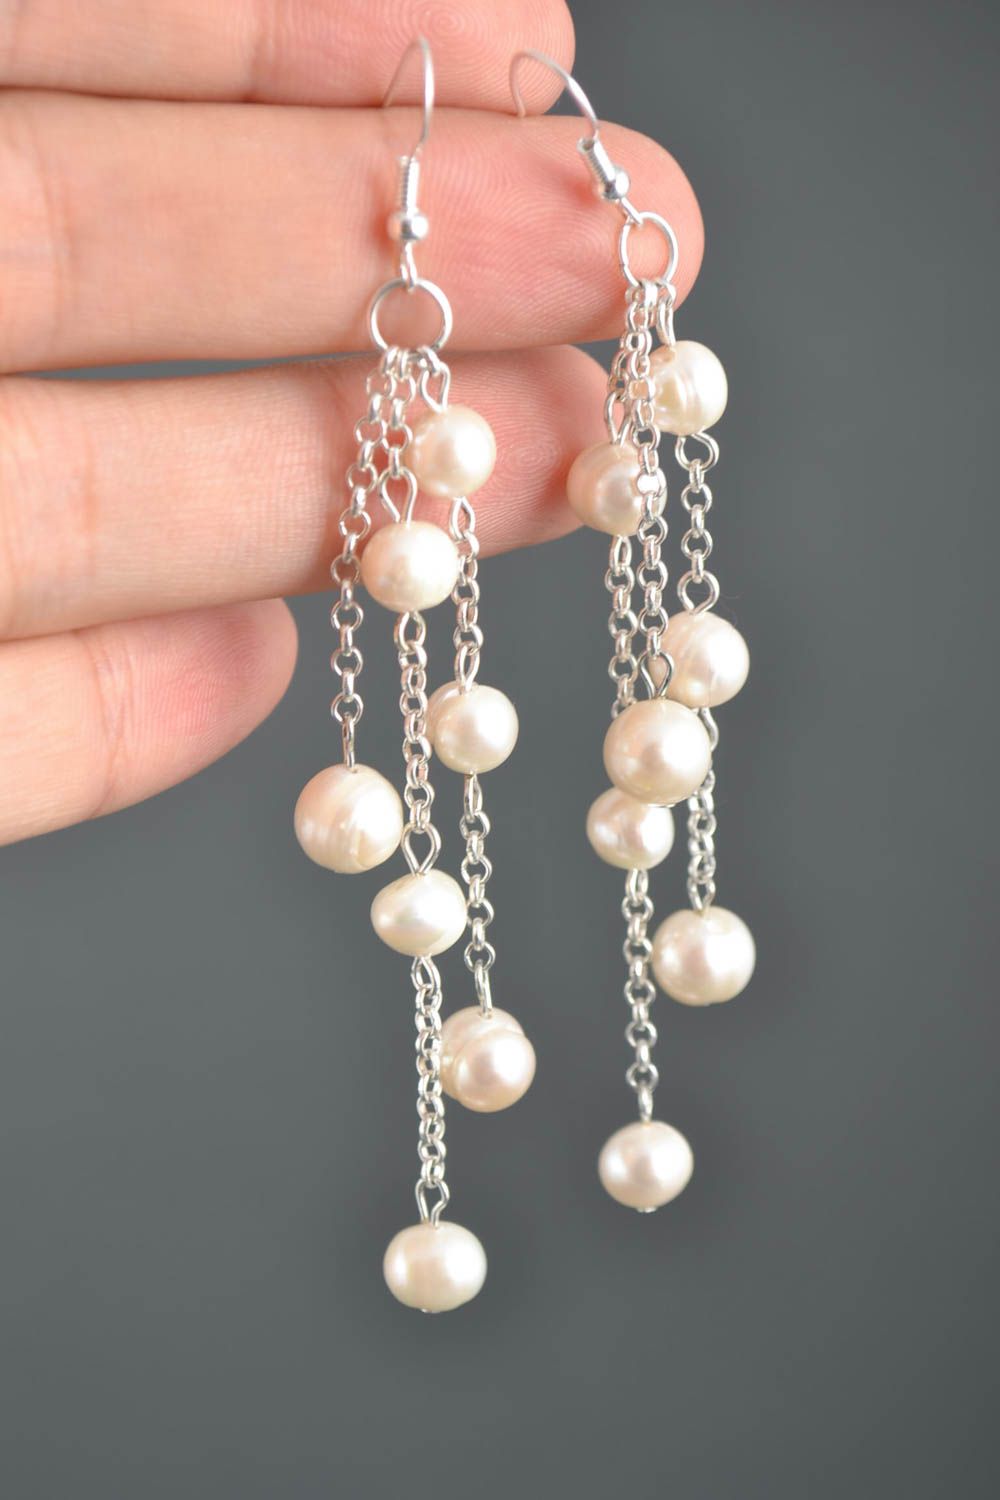 Dangling earrings handmade pearl jewelry long earrings fashion accessories photo 5